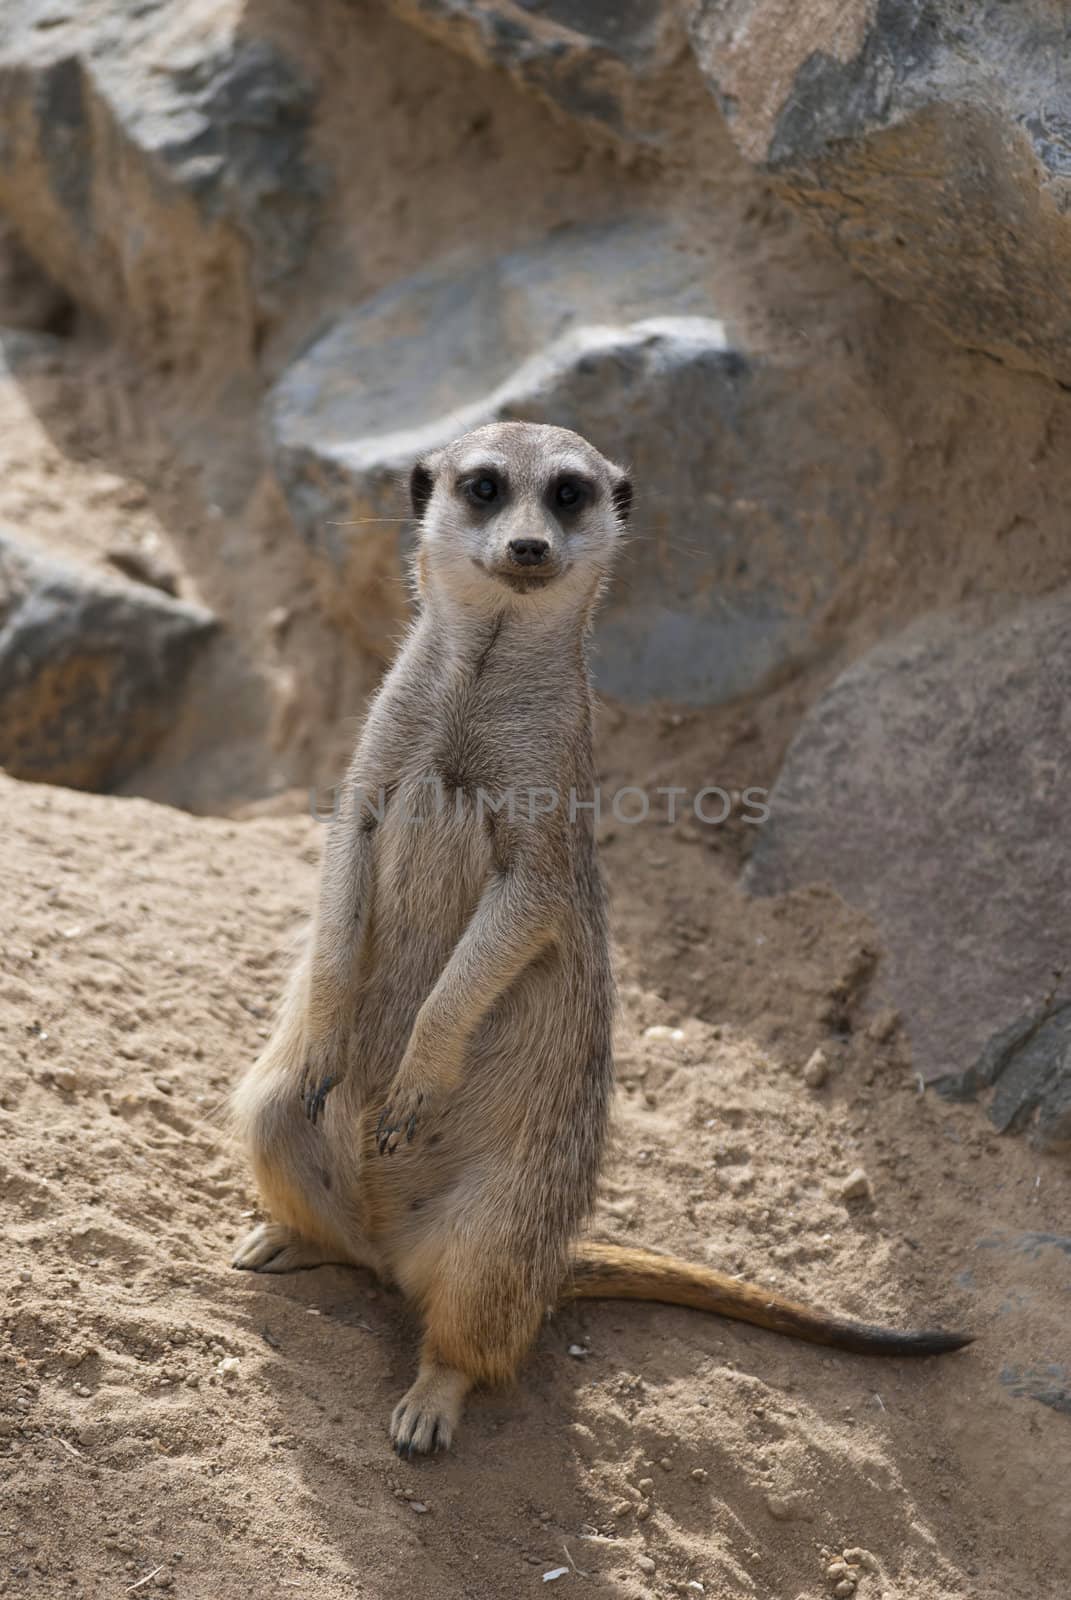 Cute meerkat or suricate, Suricata suricatta, small mammal belonging to the mongoose family